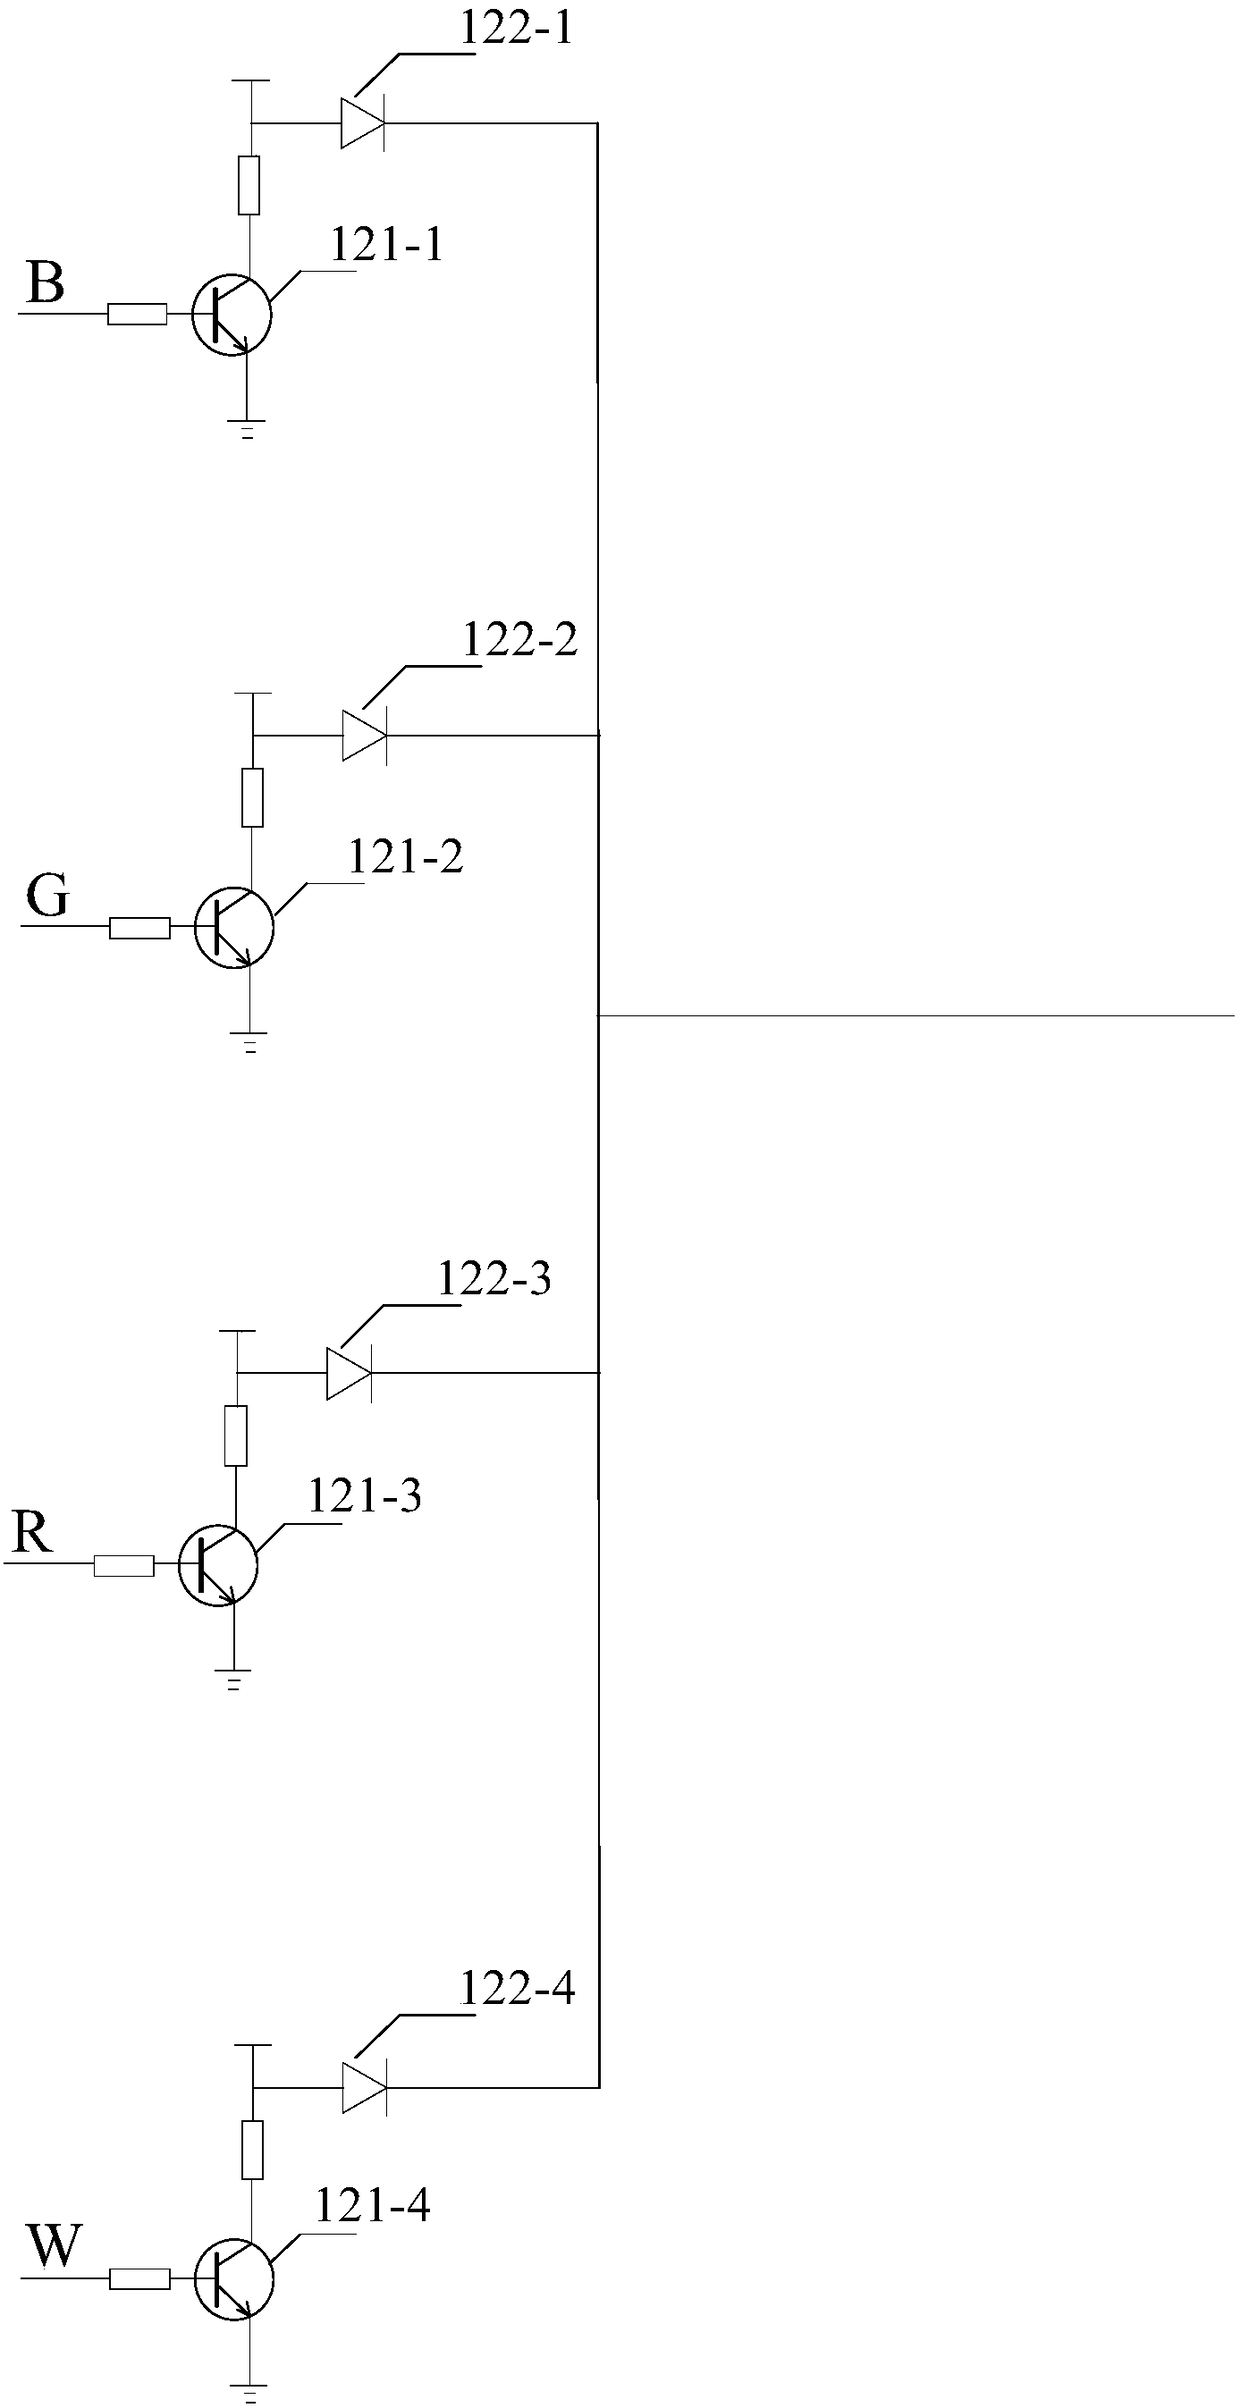 Lamp control circuit and lamp control method